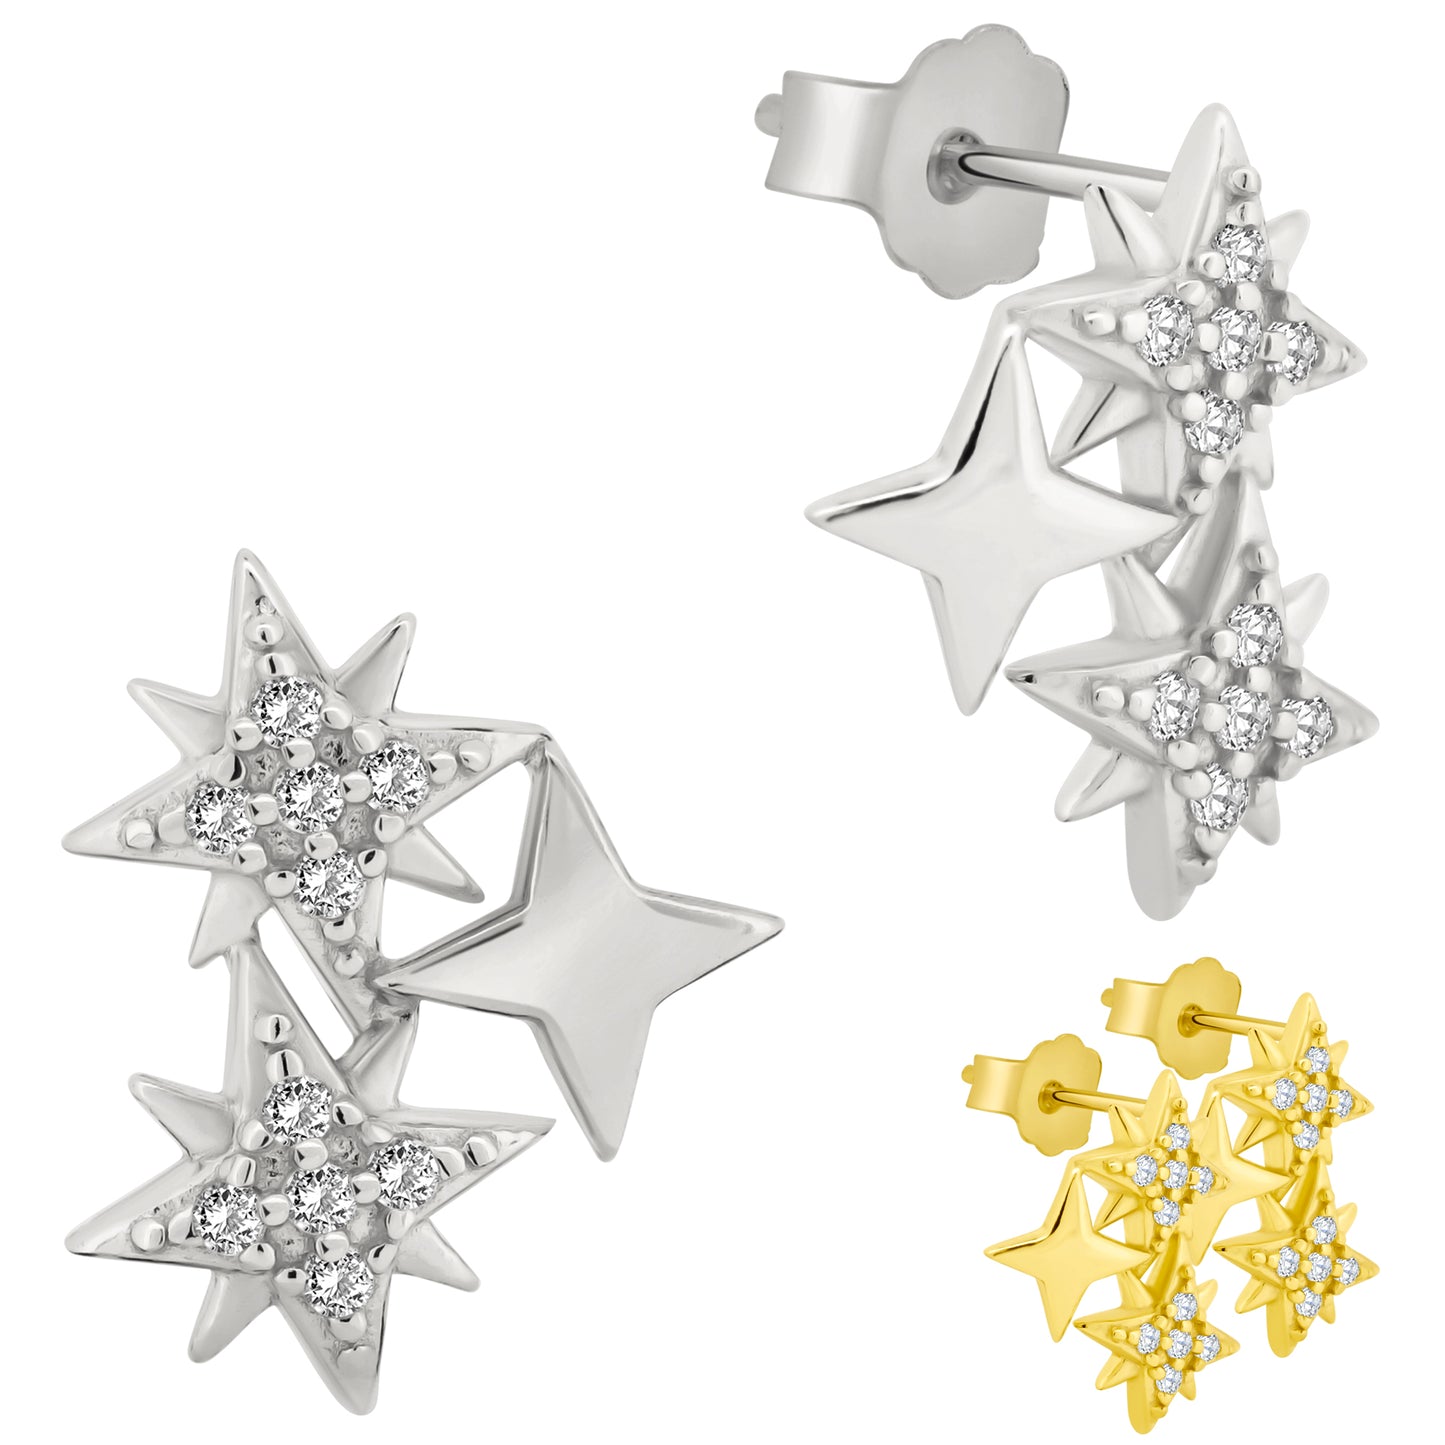 CZ Starburst Earrings, Sterling Silver Linked Design, Push Backing, Elegant CZ Jewelry